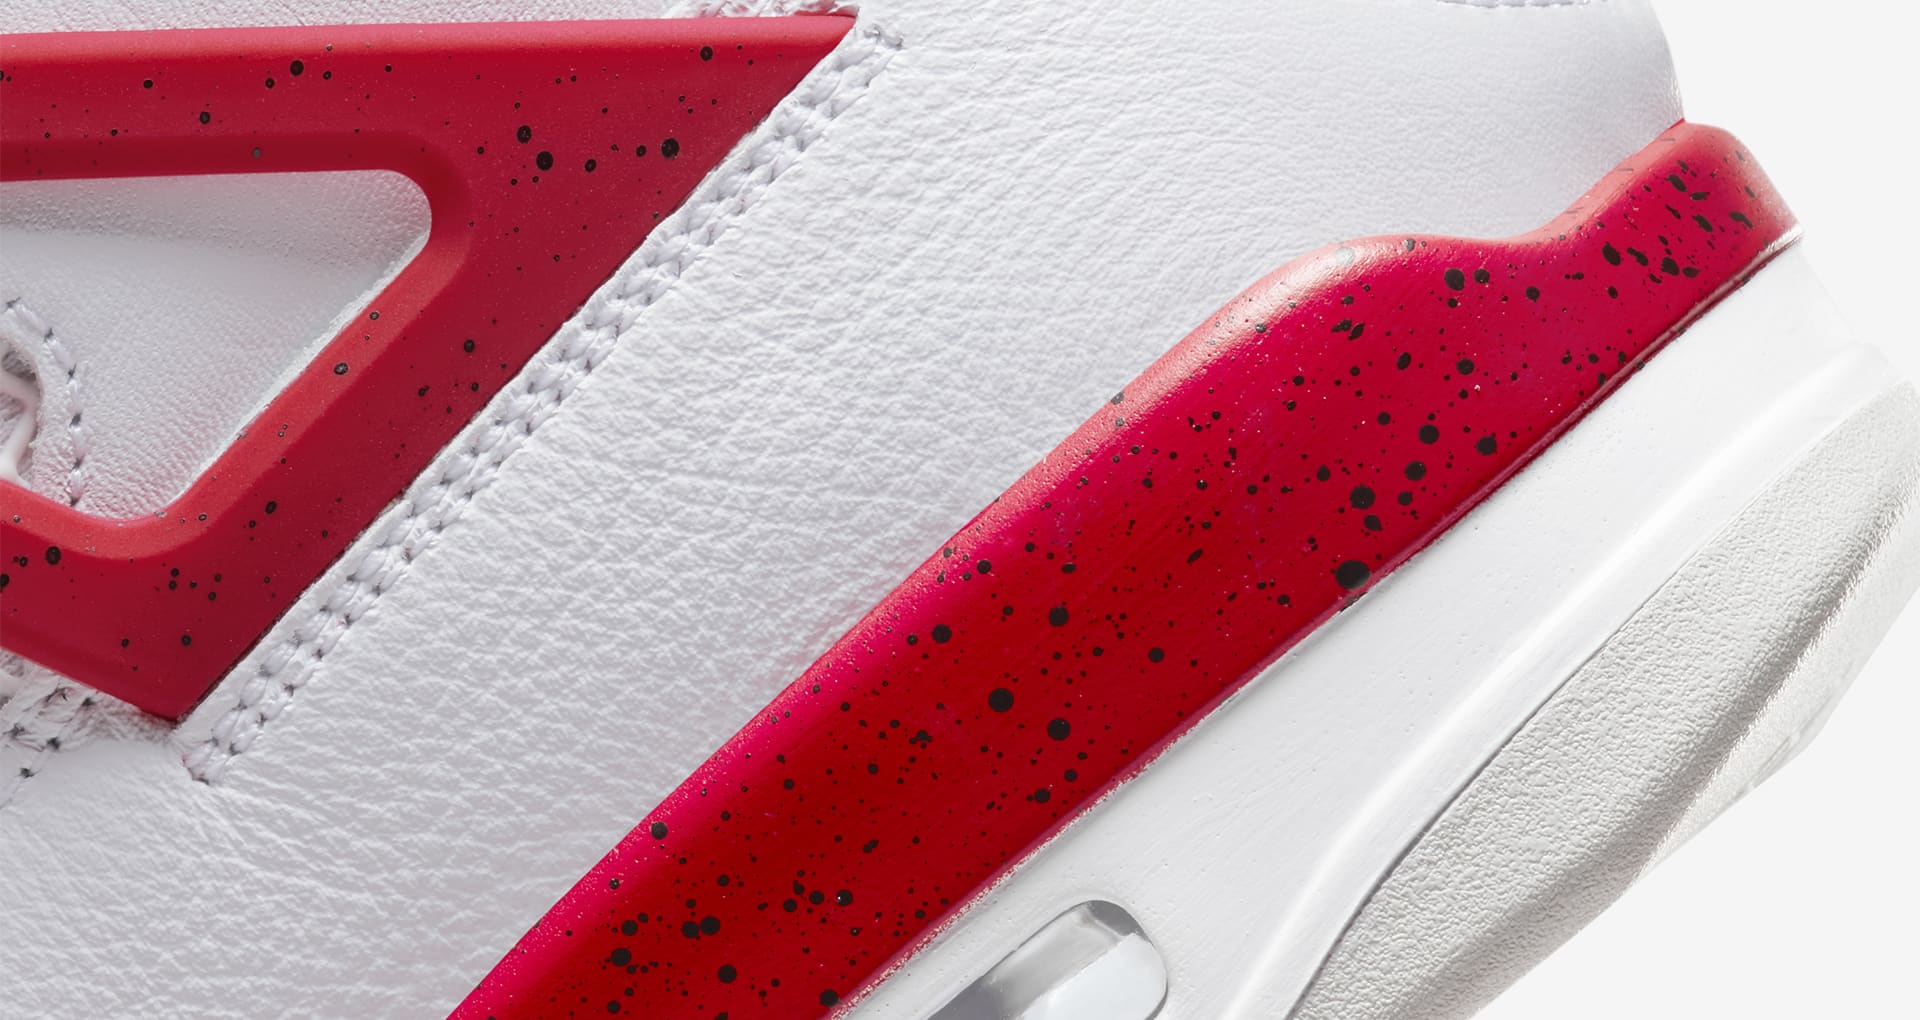 Air Jordan 4 'Red Cement' (DH6927-161) release date . Nike SNKRS CA